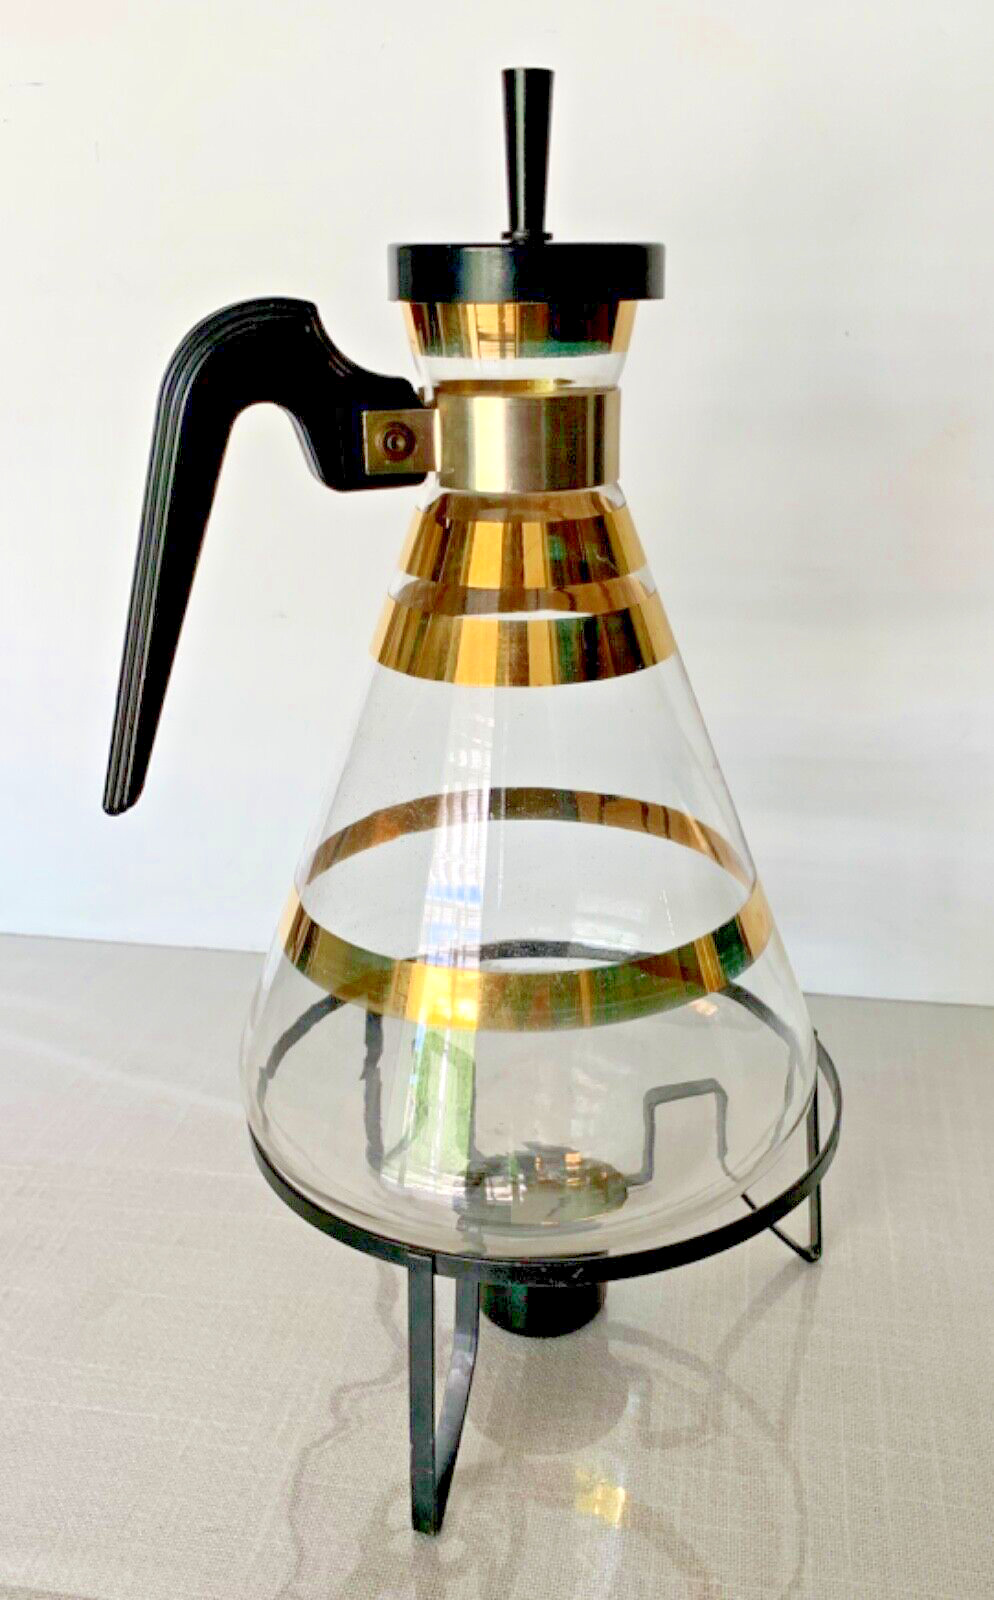 Vintage Mid Century Modern Coffee Decanter/Carafe - Black Warmer Stand